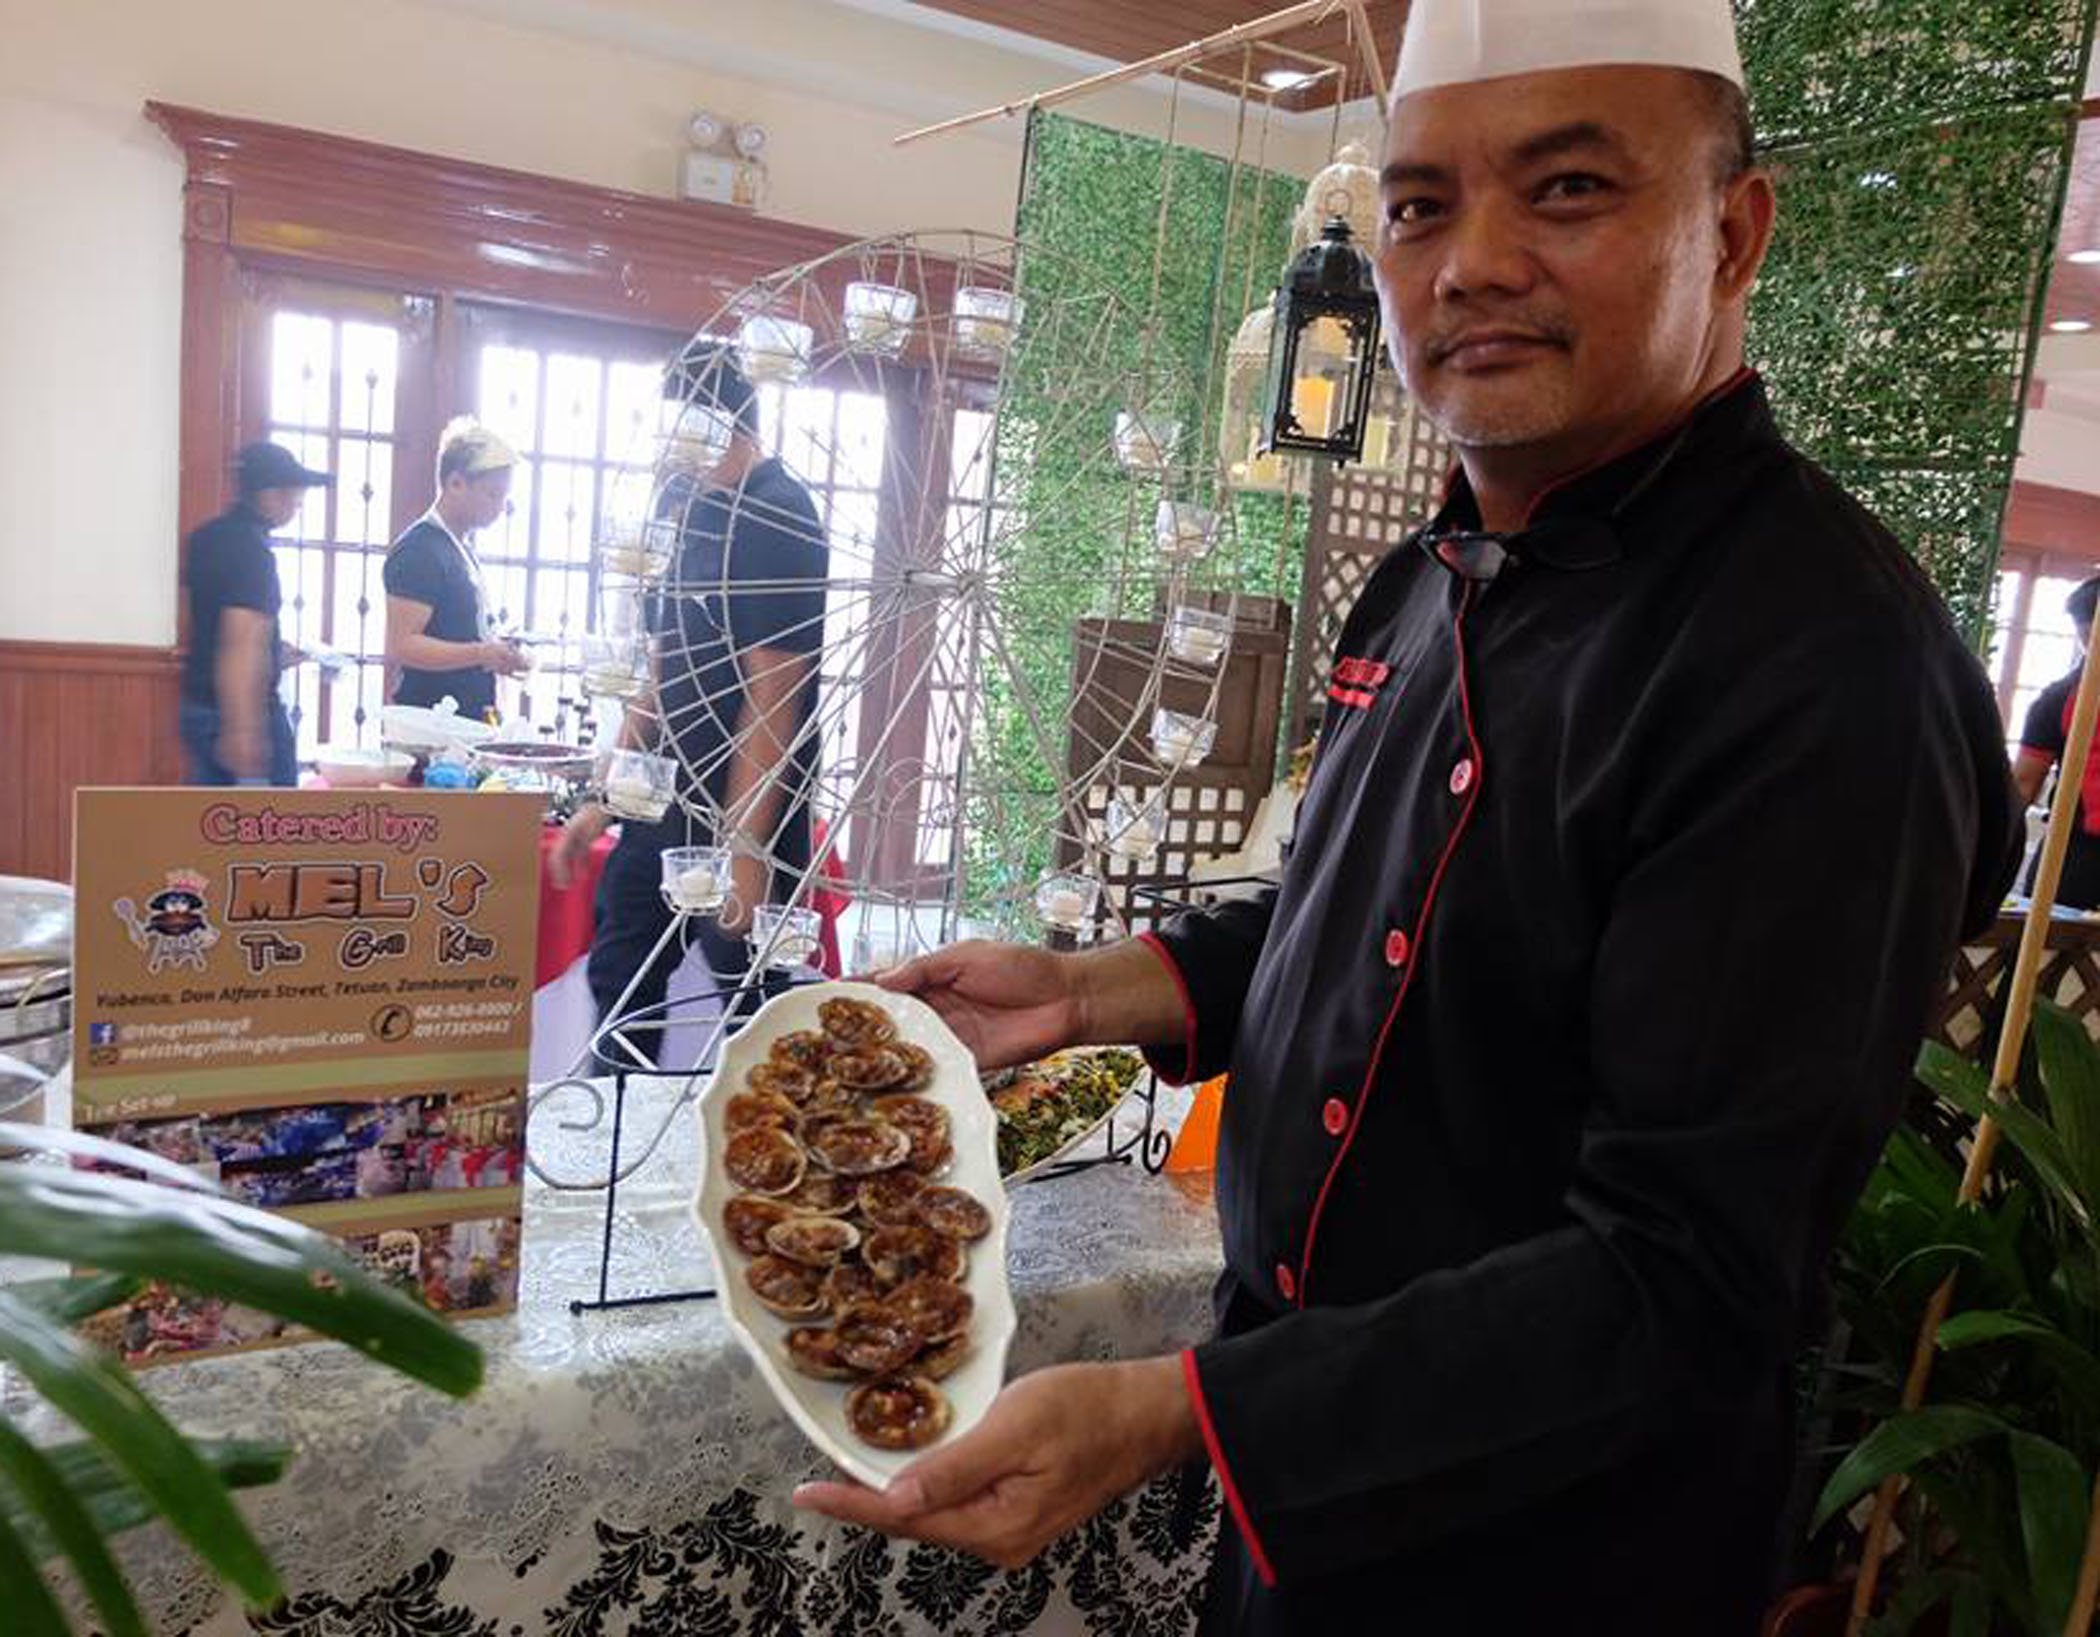 'Savores 2017' culinary event in Zamboanga City